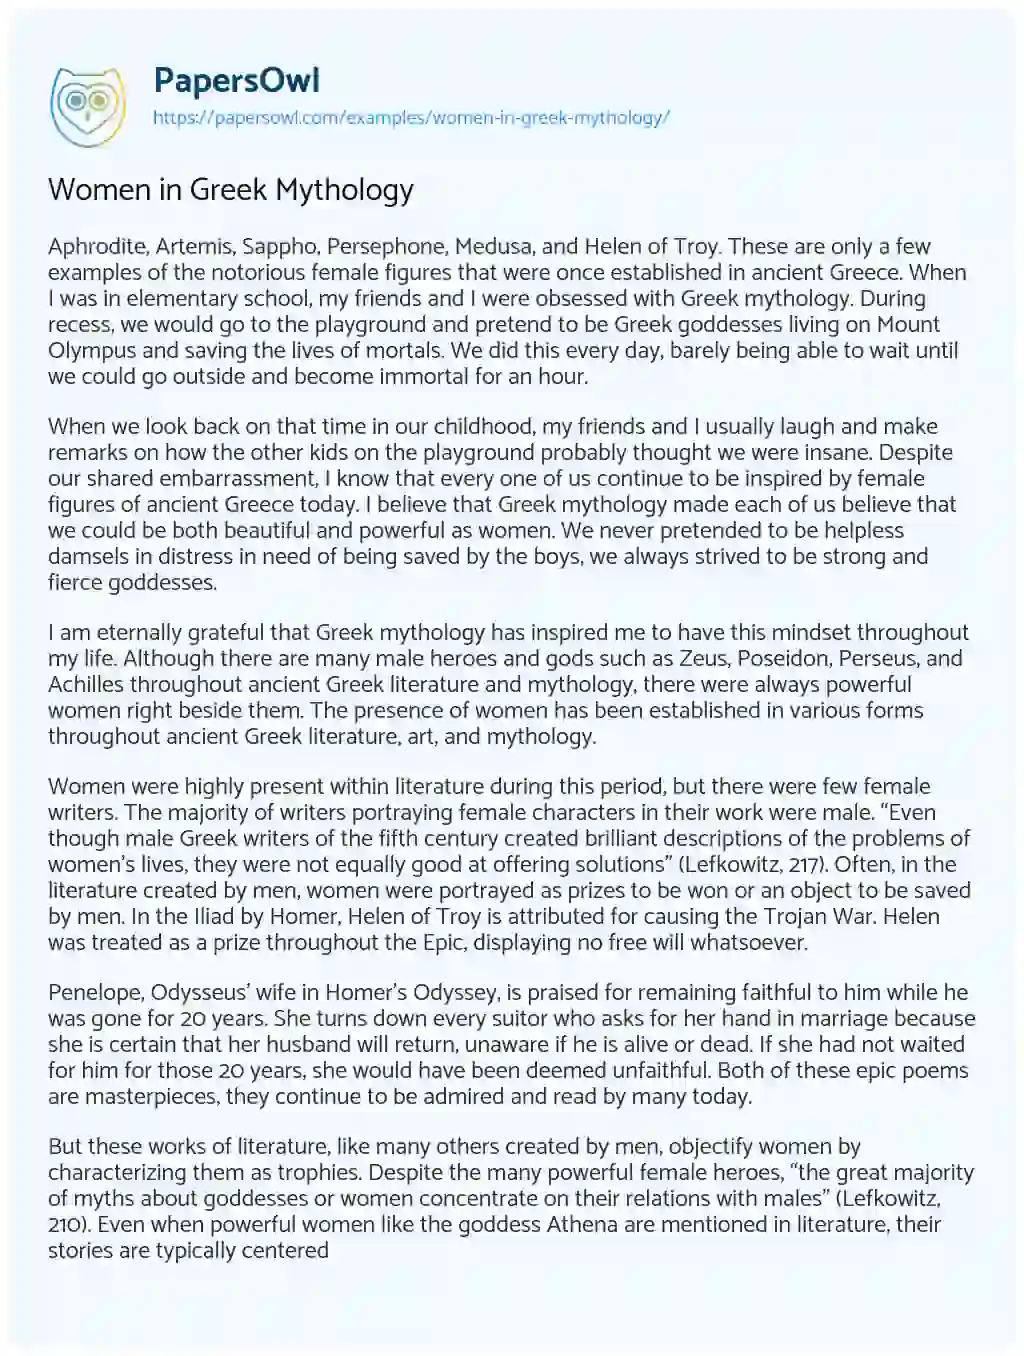 Essay on Women in Greek Mythology